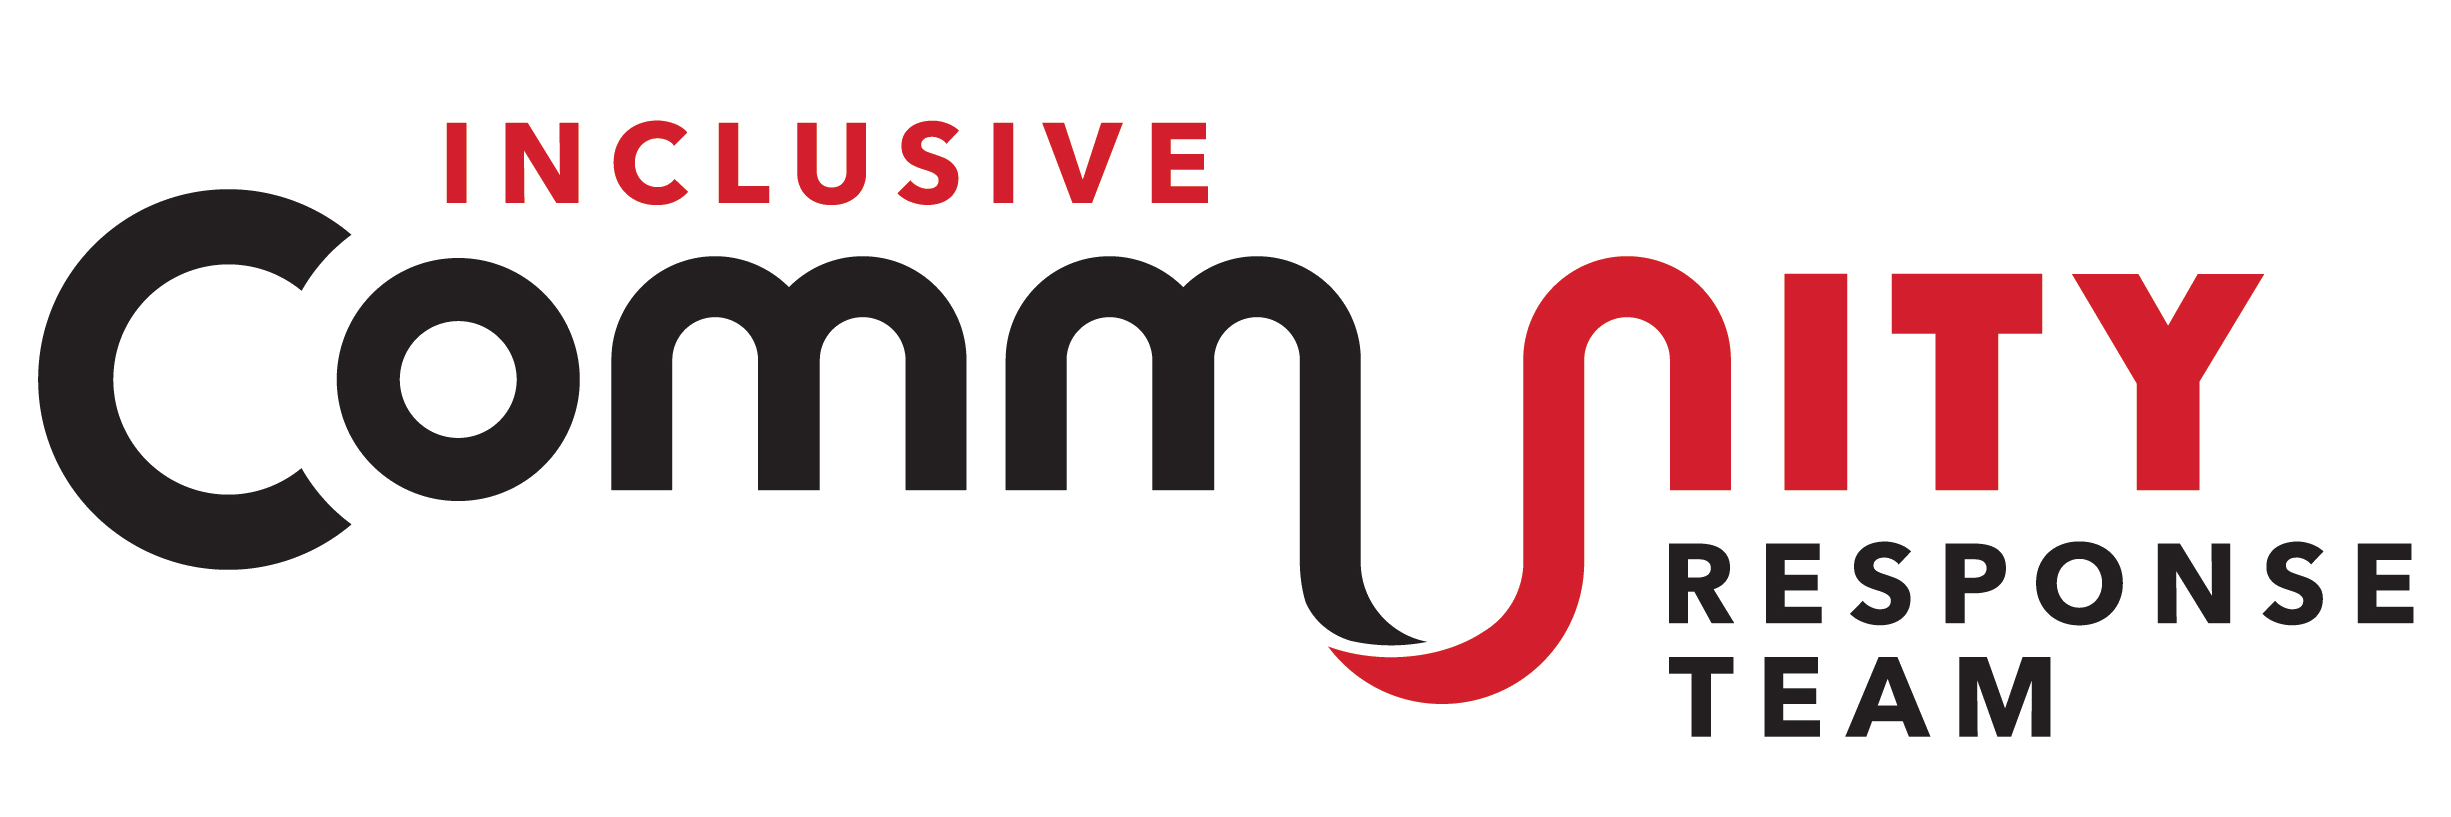 Inclusive Community Response Team Logo